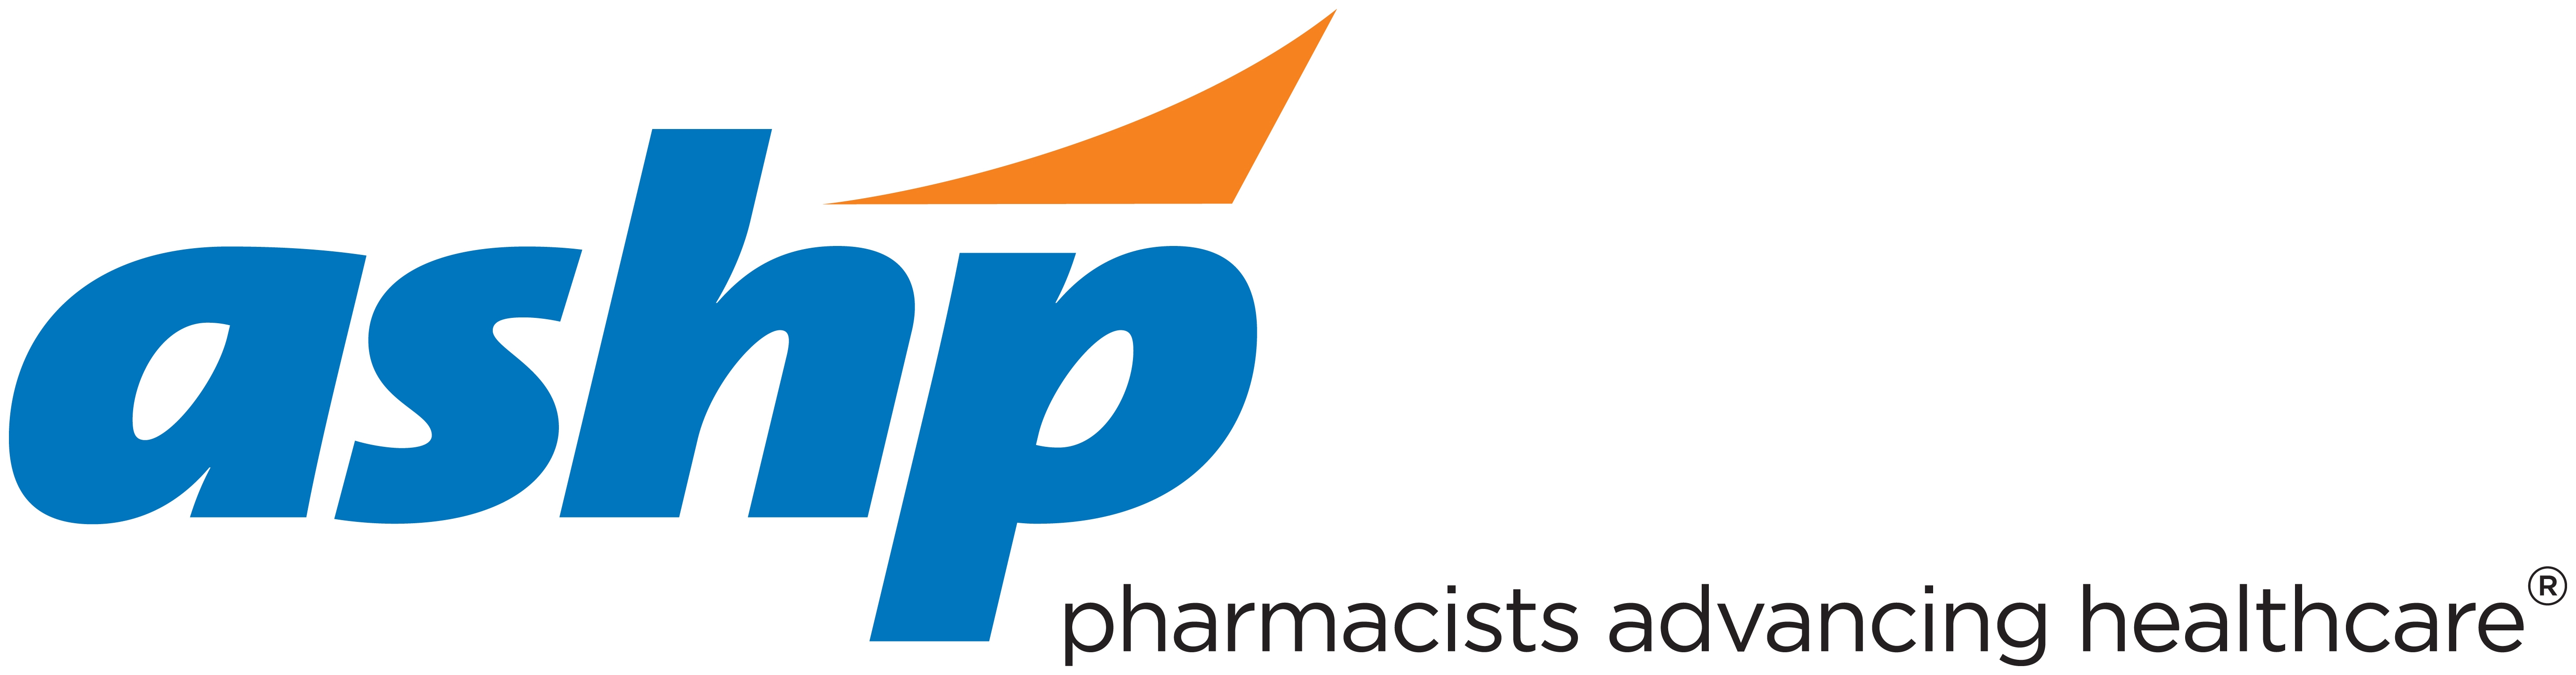 ASHP (American Society of Health-System Pharmacists) logo